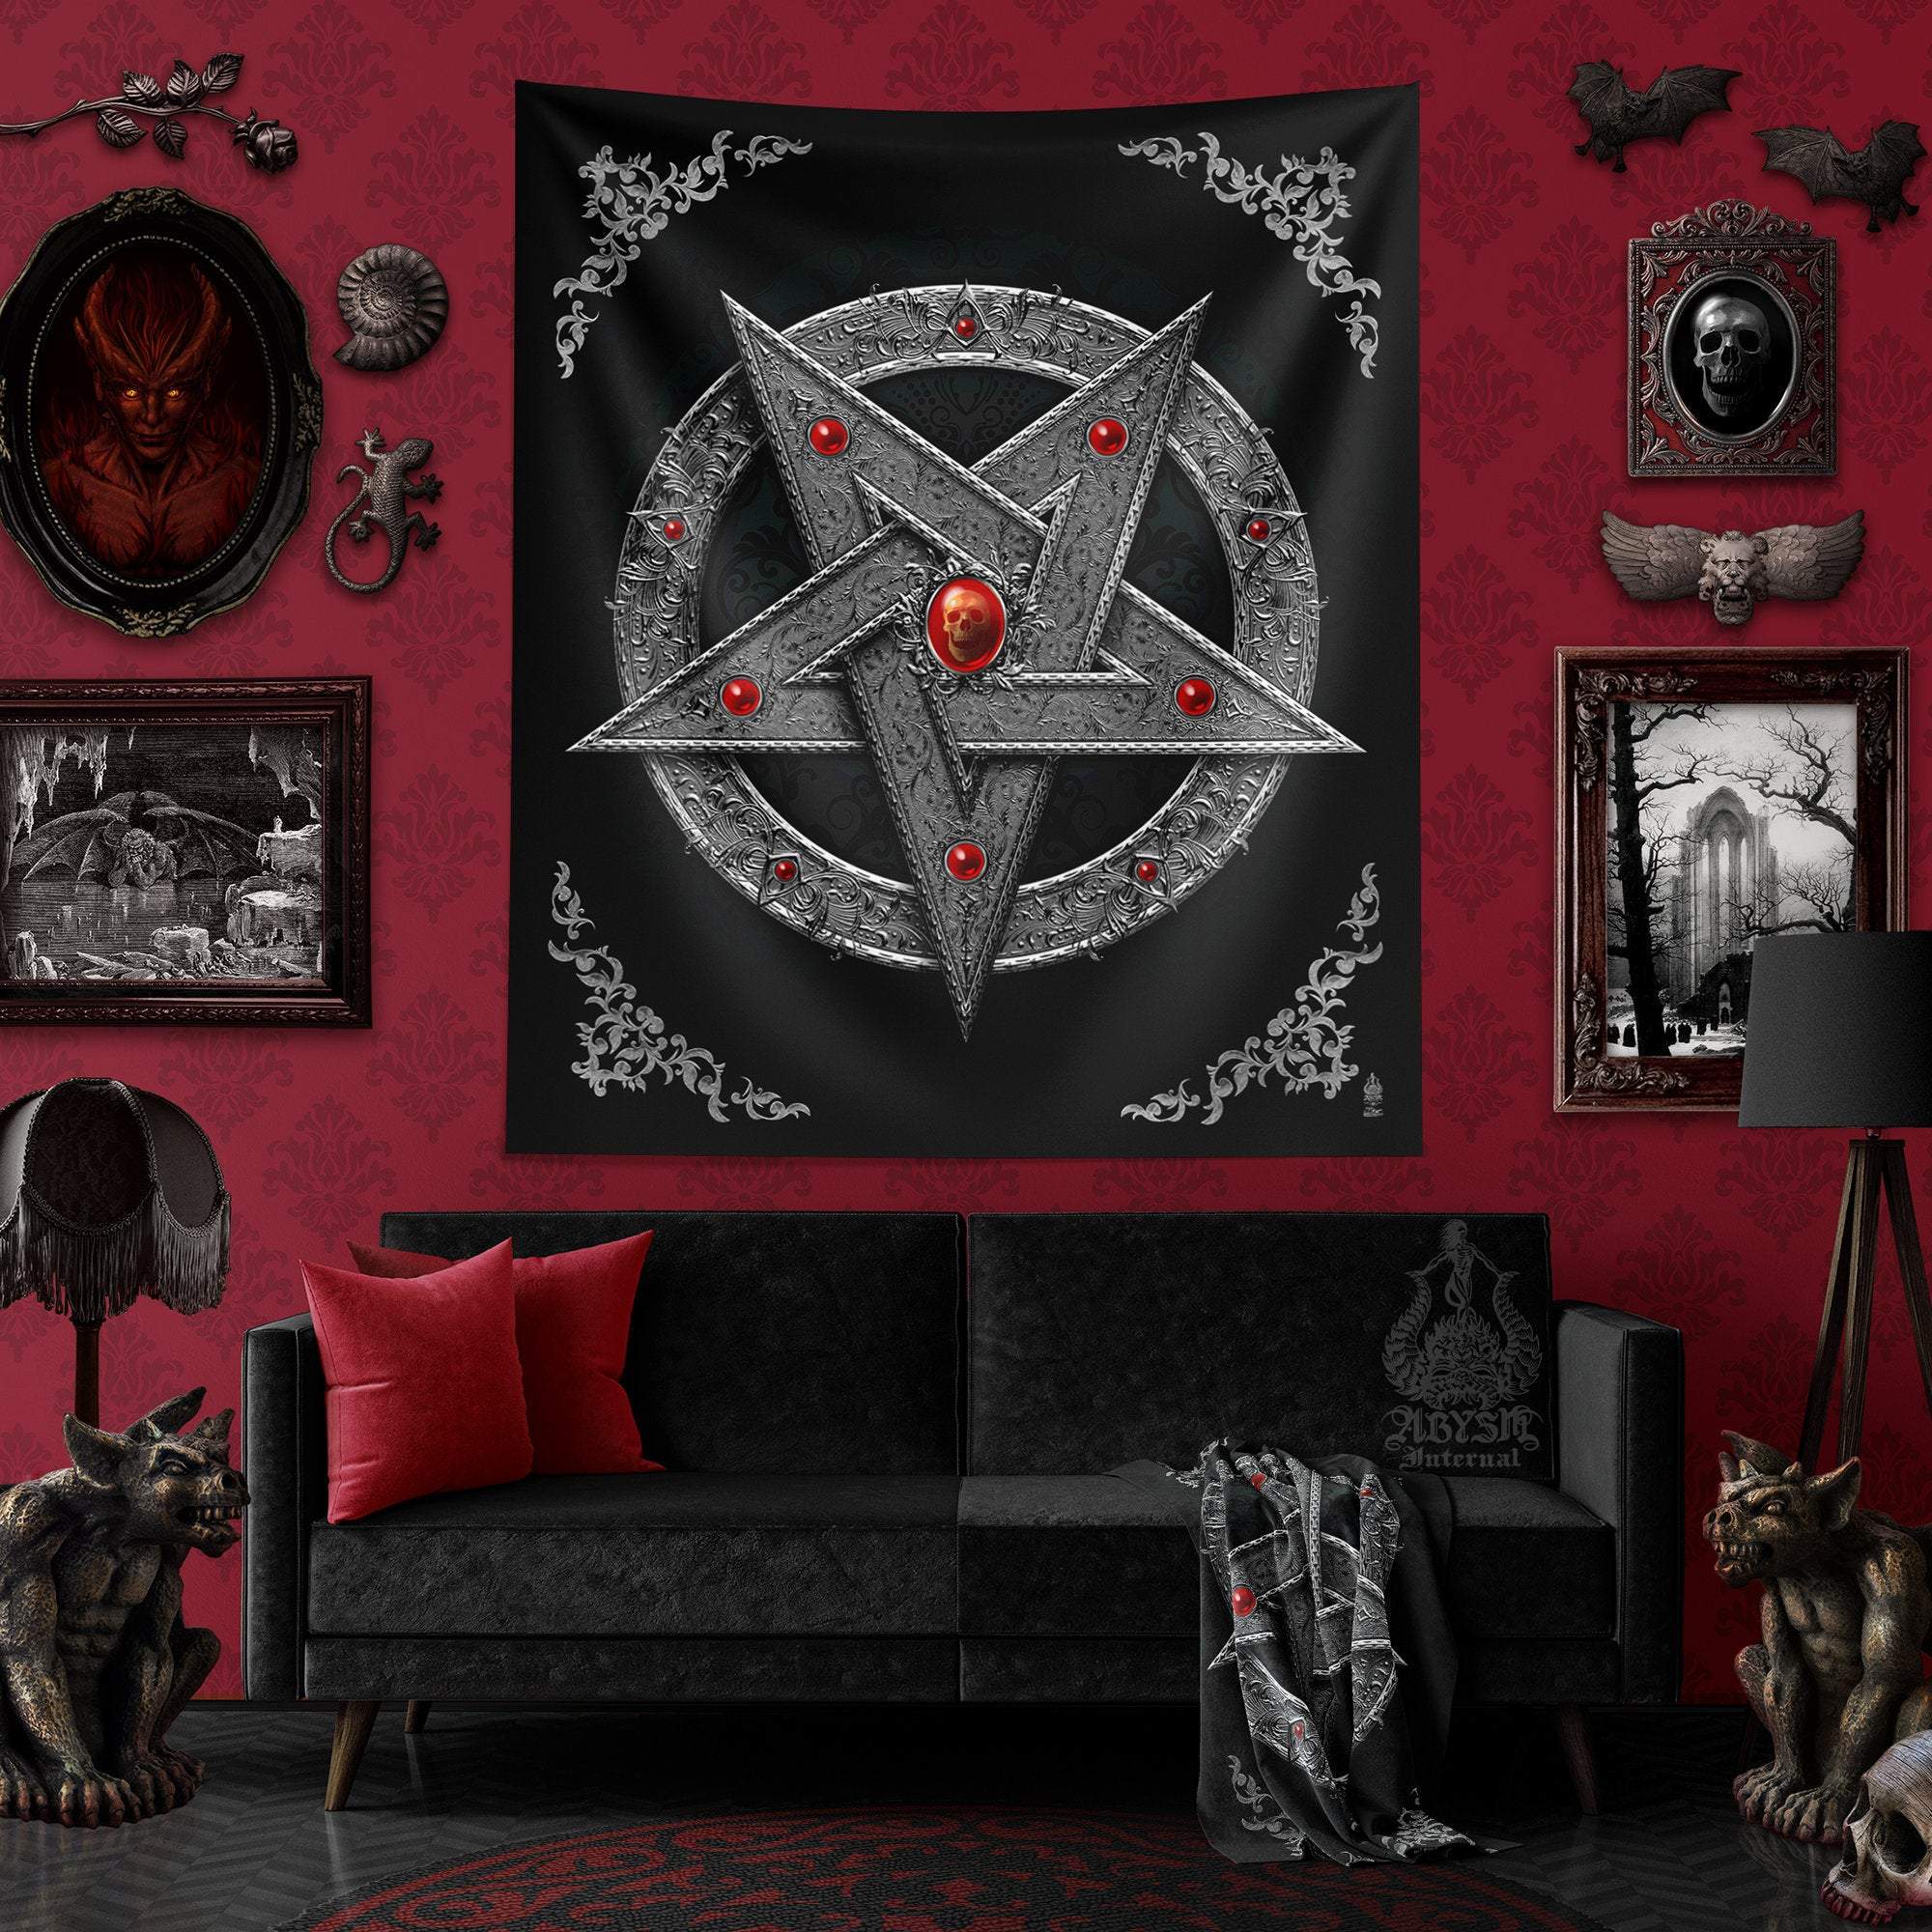 Pentagram Tapestry, Occult Wall Hanging, Satanic Home Decor, Art Print - Silver - Abysm Internal